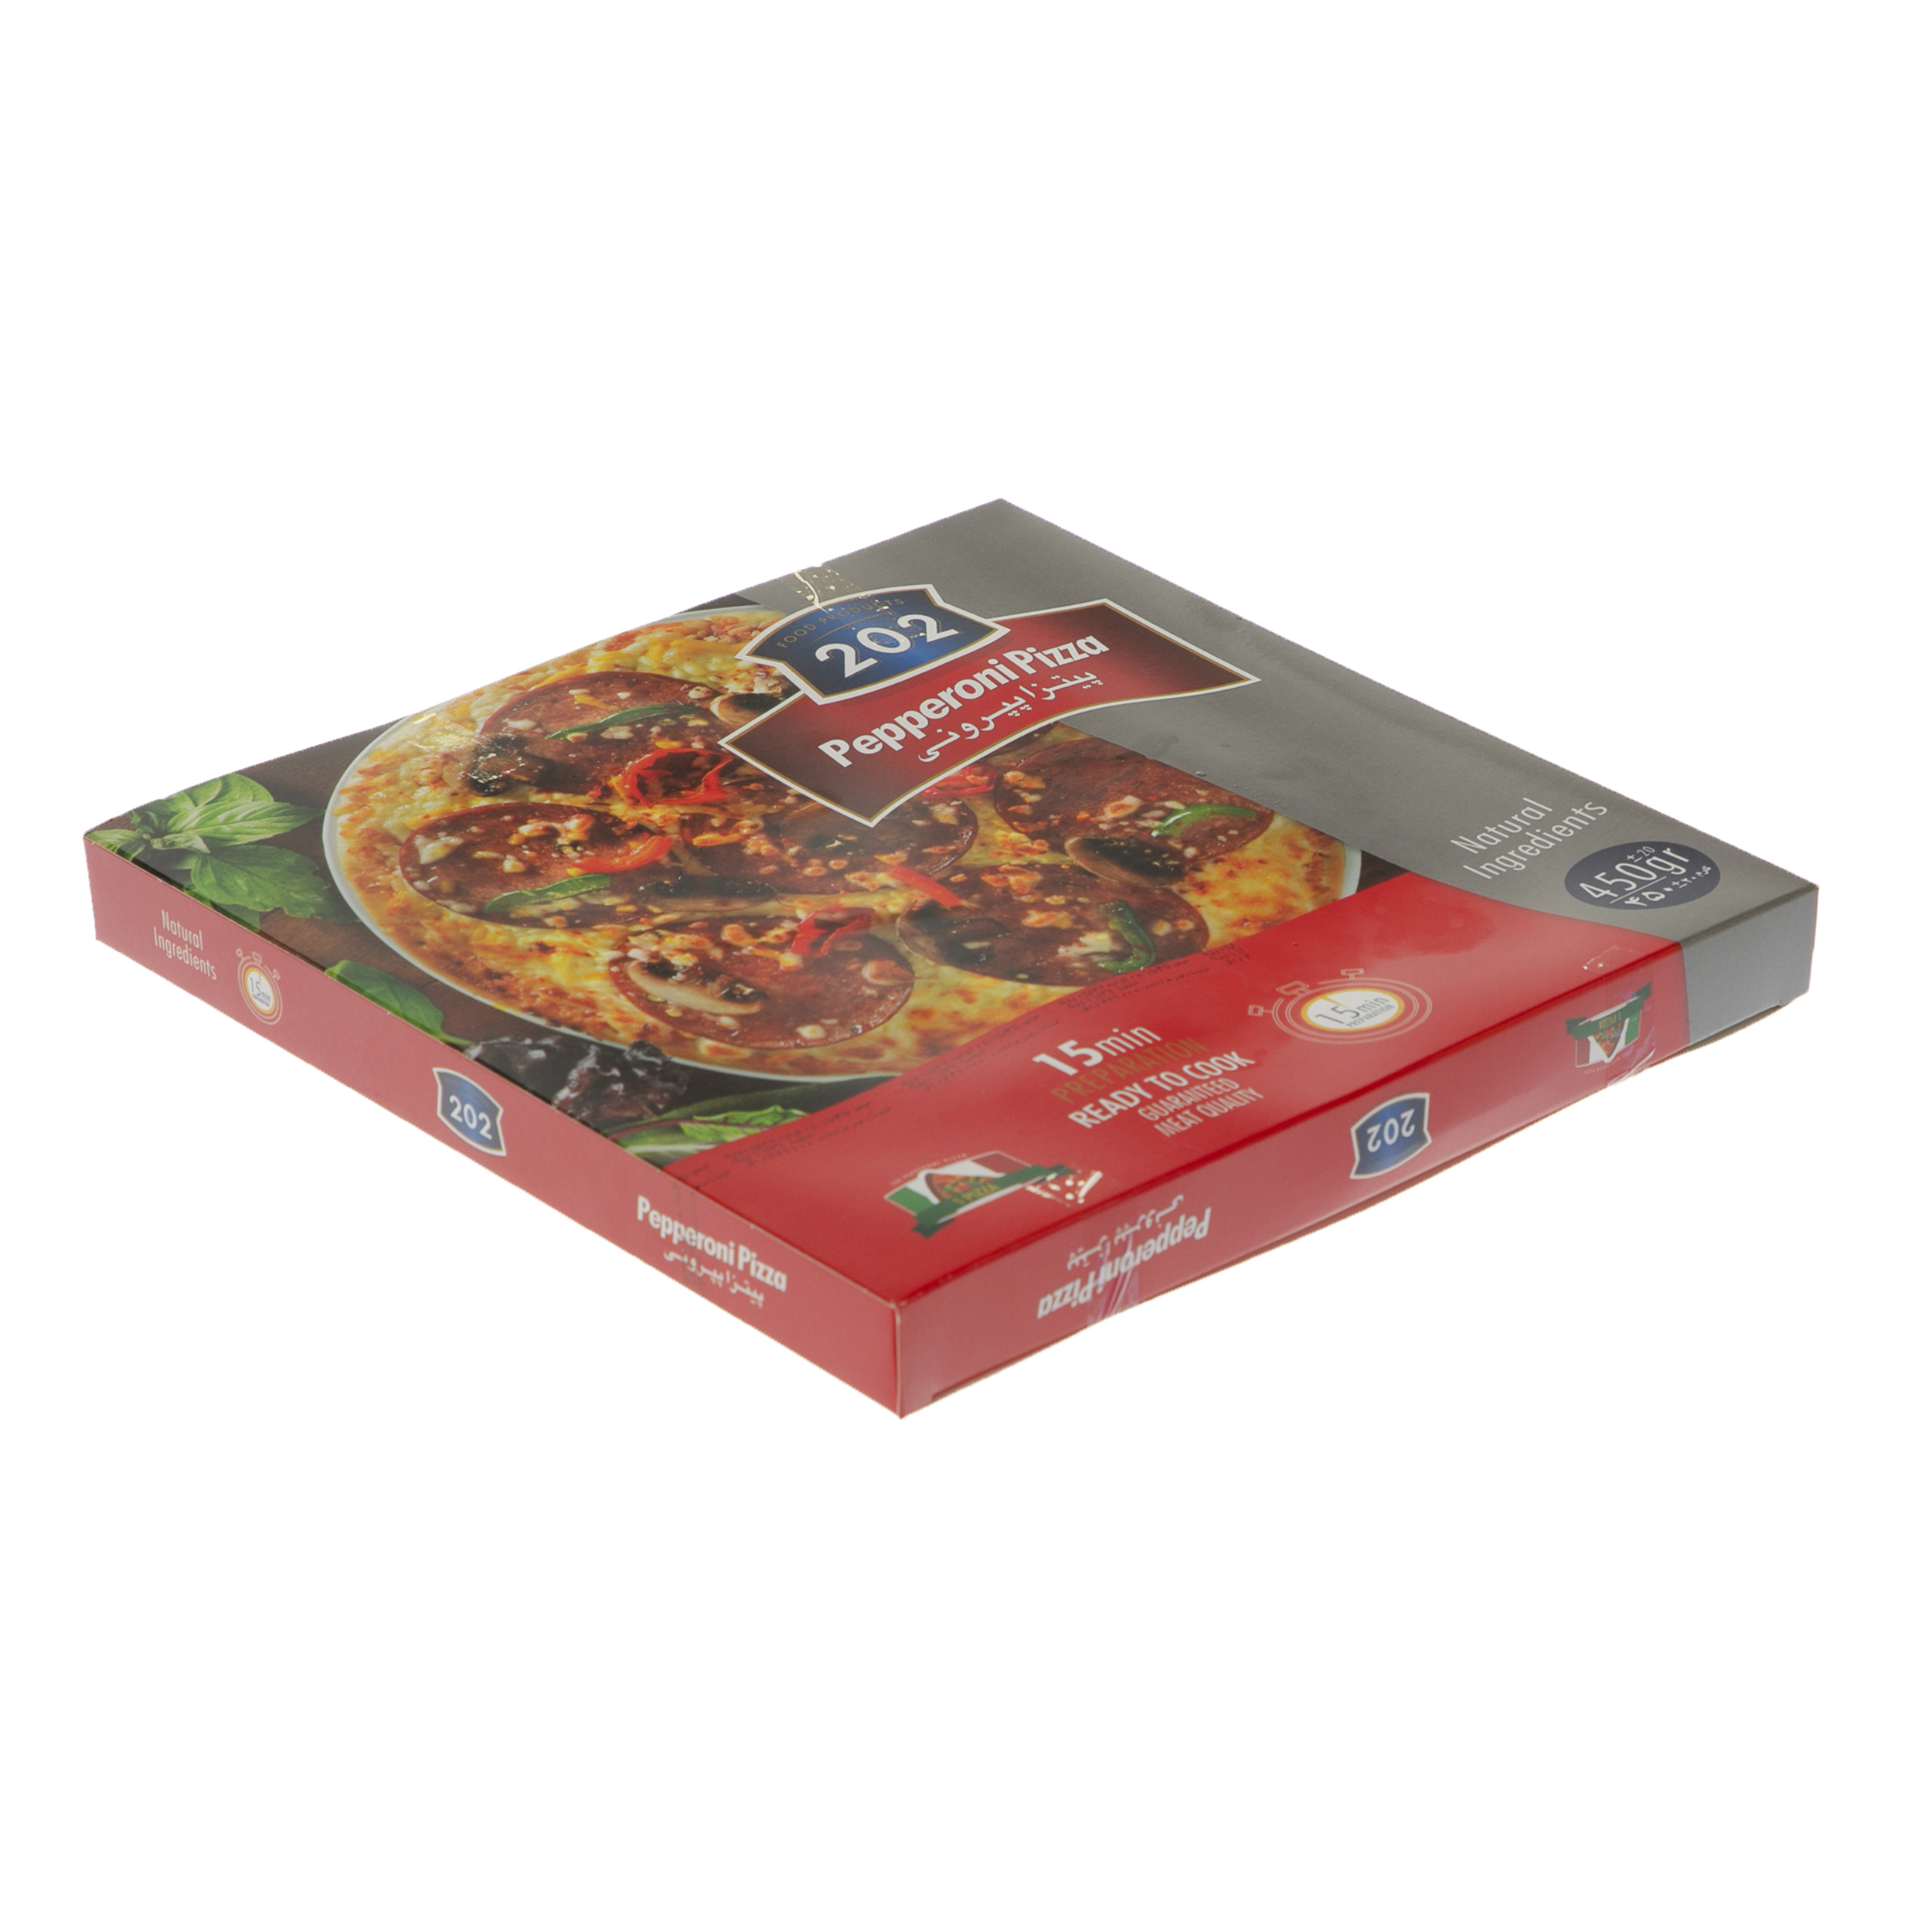 پیتزا پپرونی 202 - 450 گرم